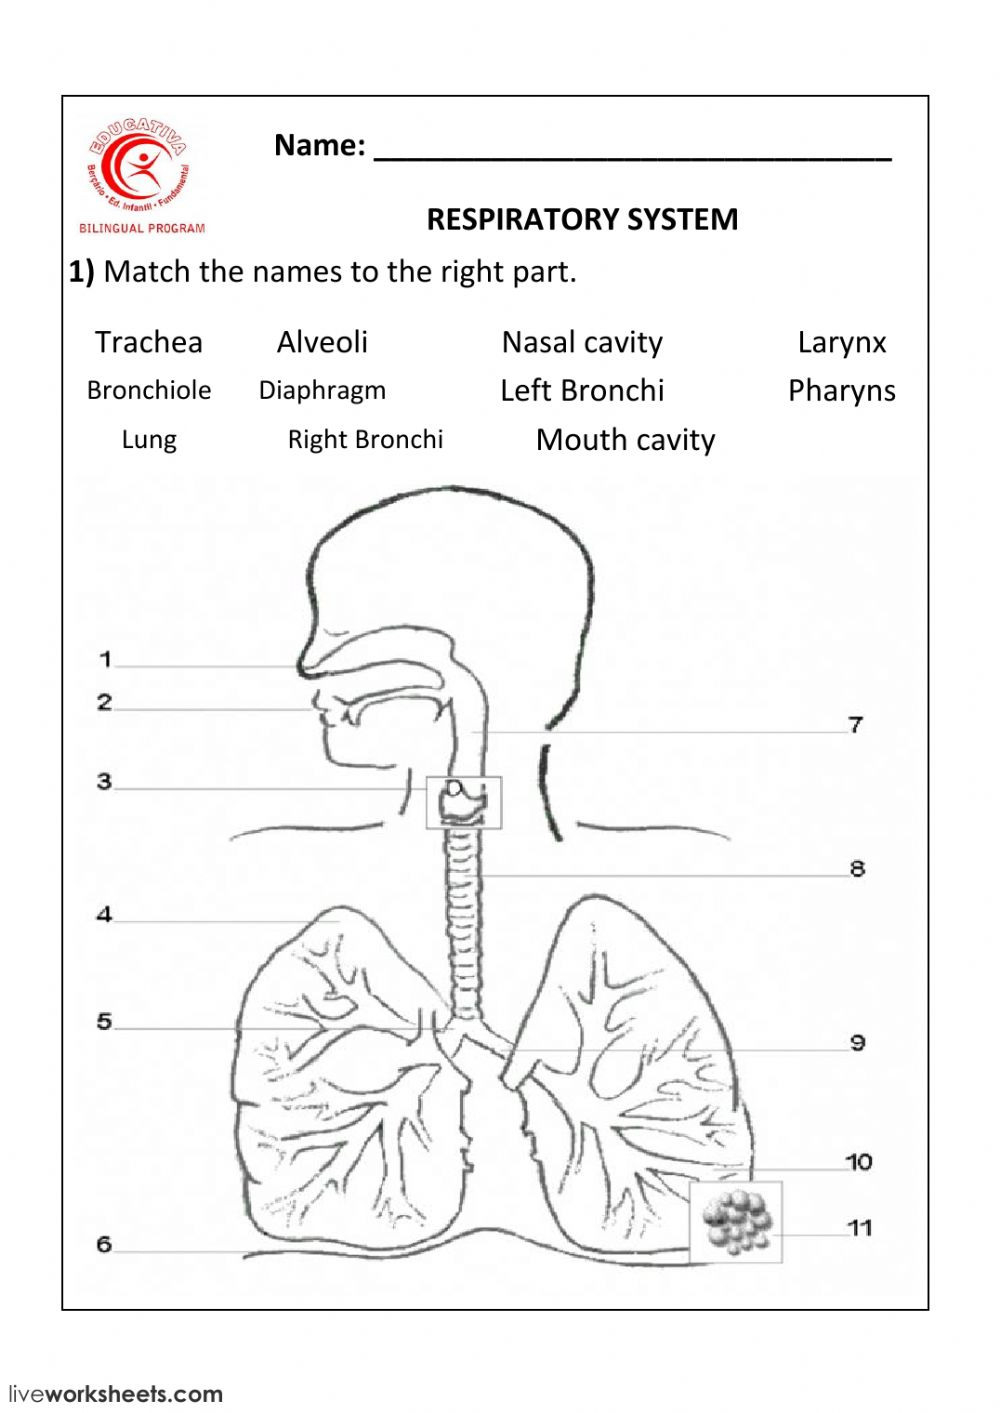 Respiratory System Worksheet — db-excel.com